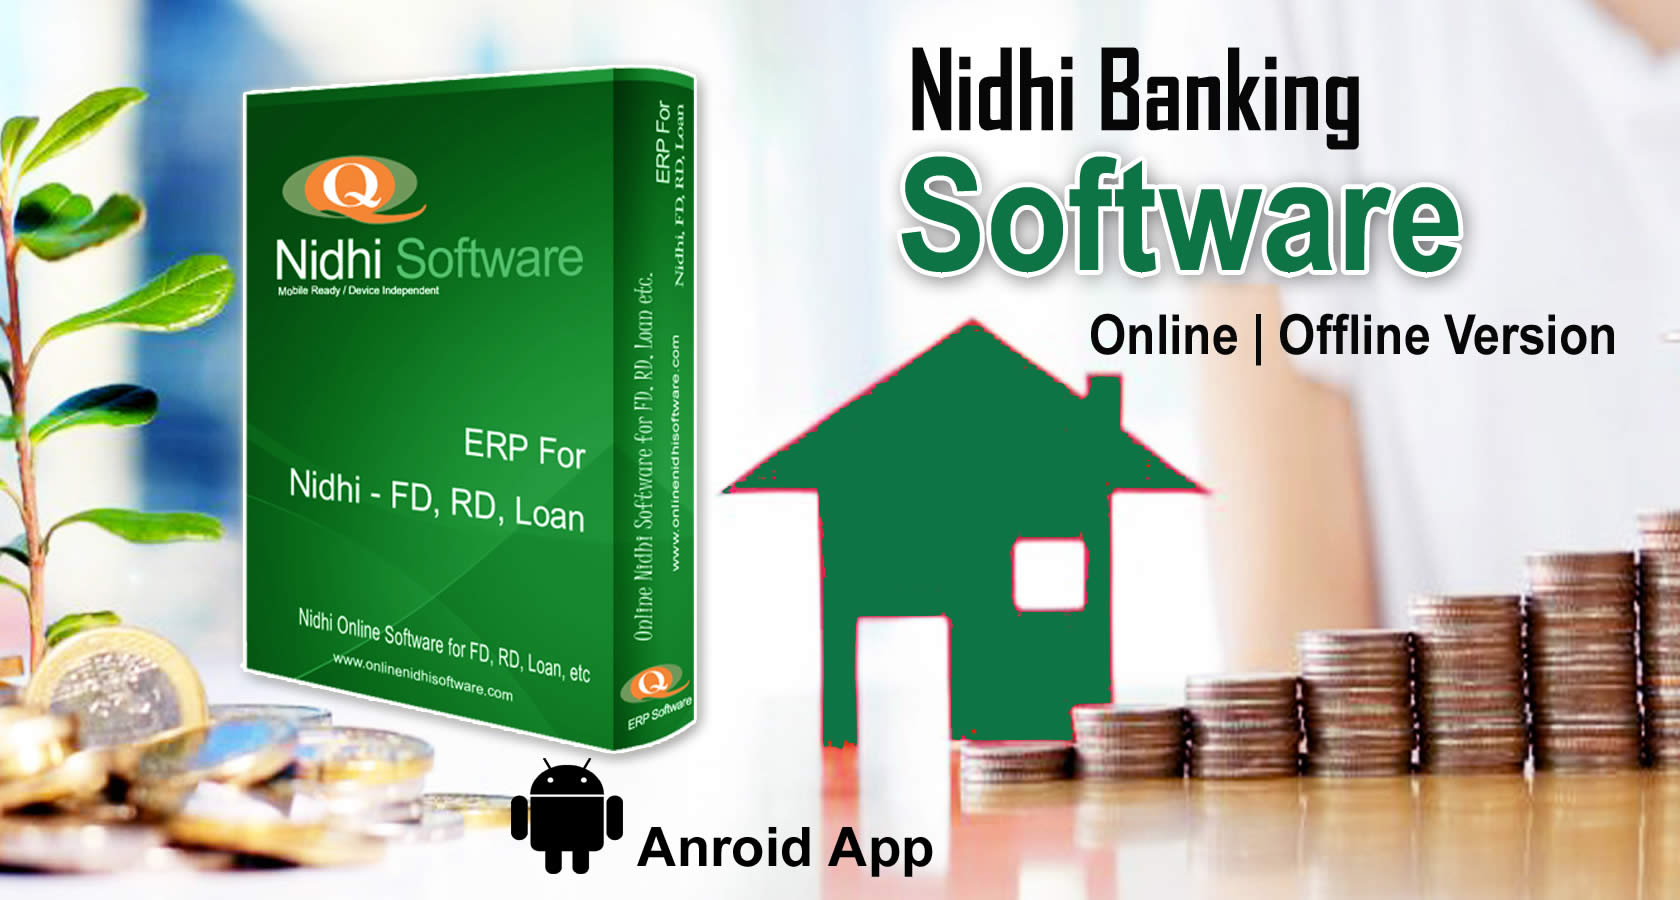 Nidhi Software Image